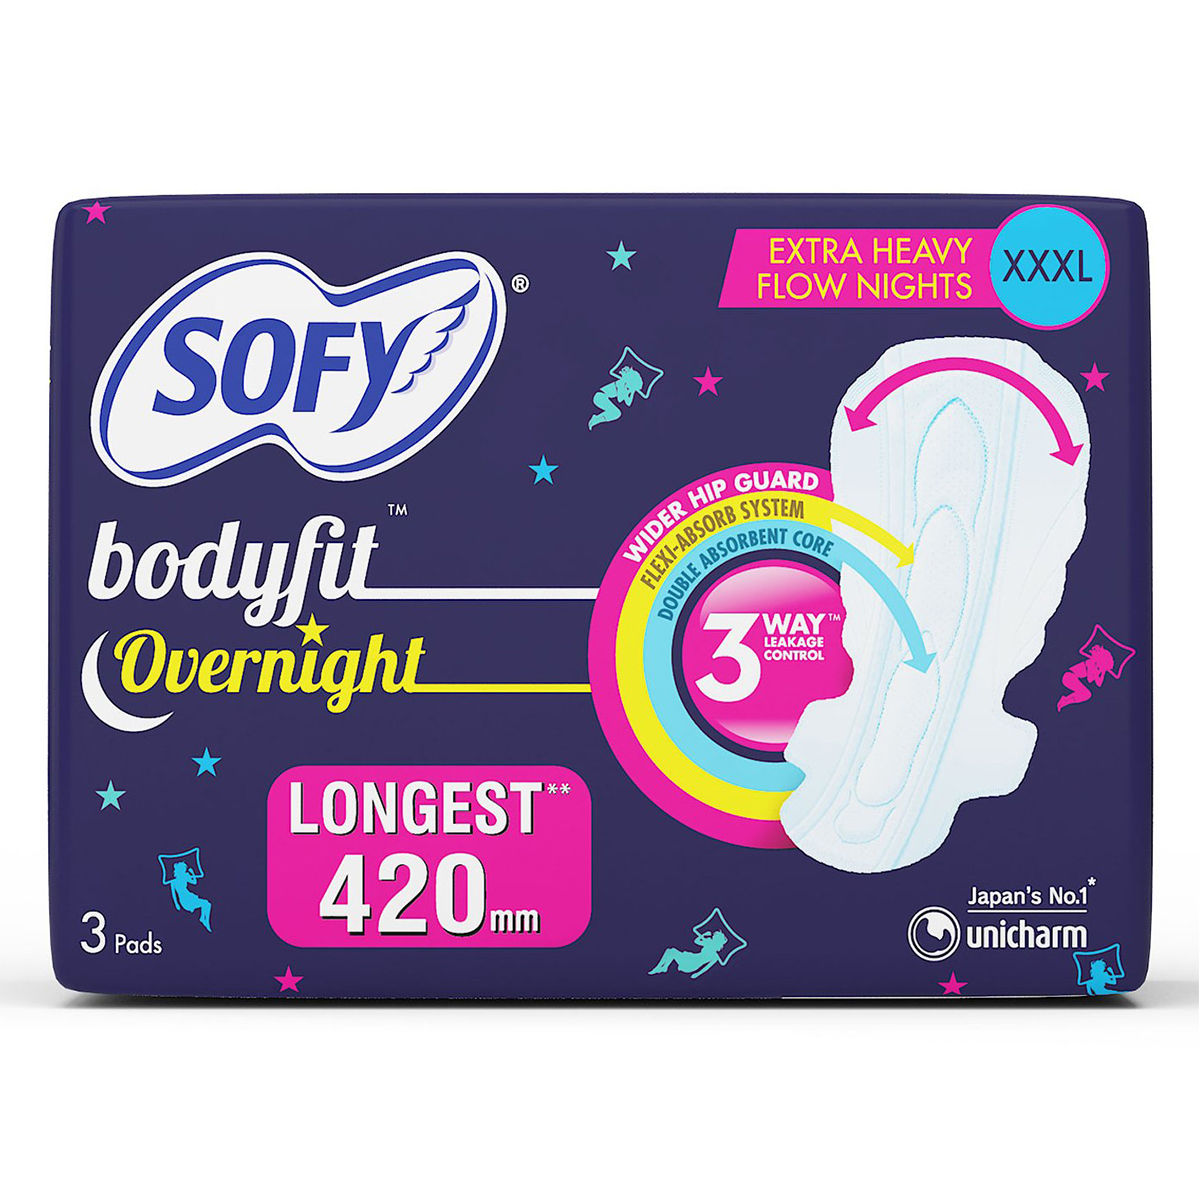 Buy Sofy Bodyfit Overnight Sanitary Pads XXXL, 3 Count Online